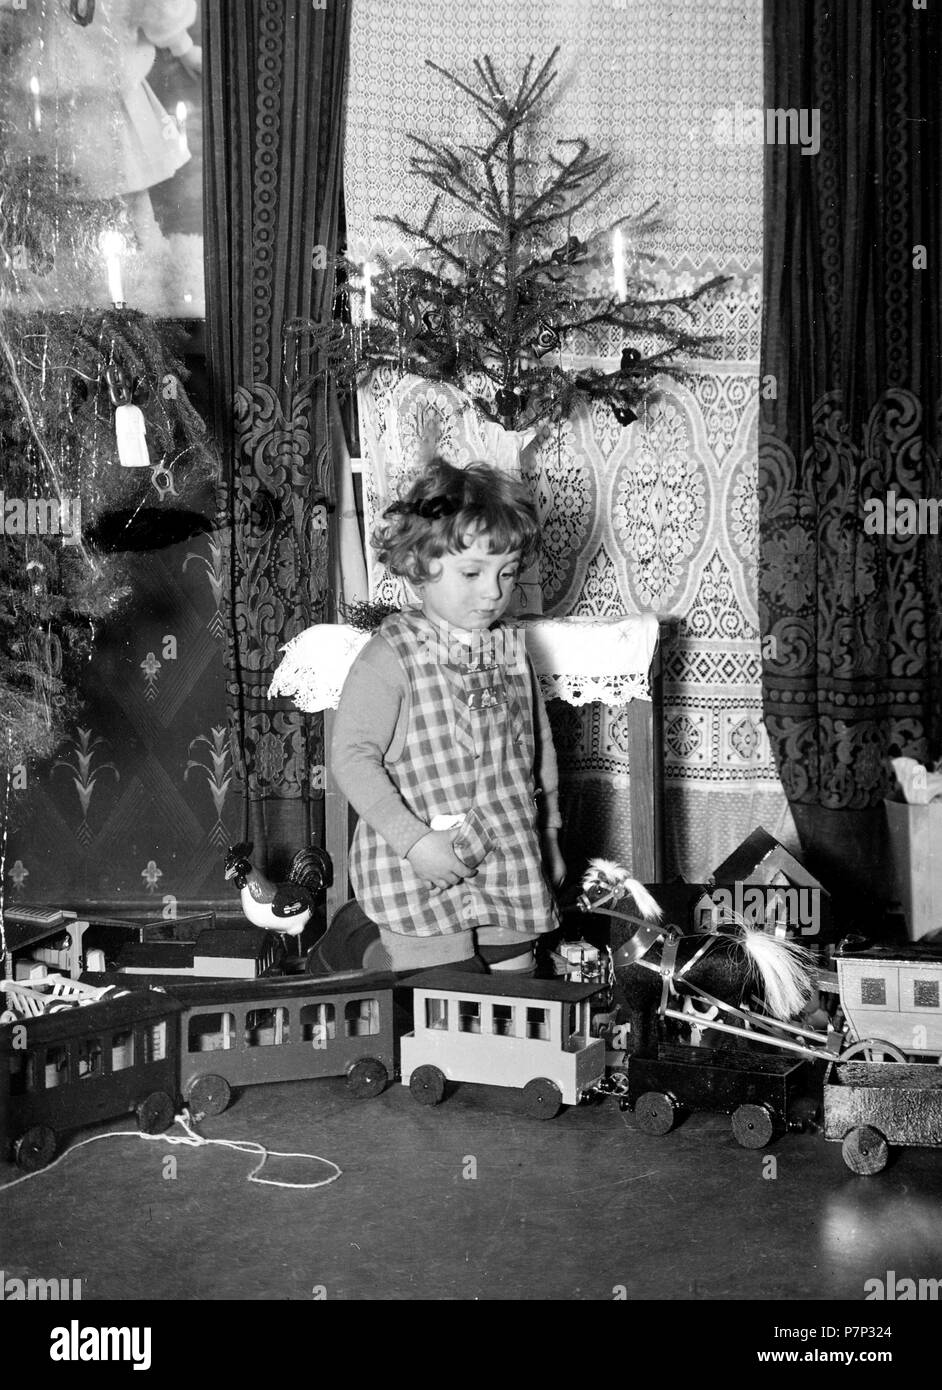 Kind Christmas model railway, ca. 1928, exact location unknown, Germany Stock Photo